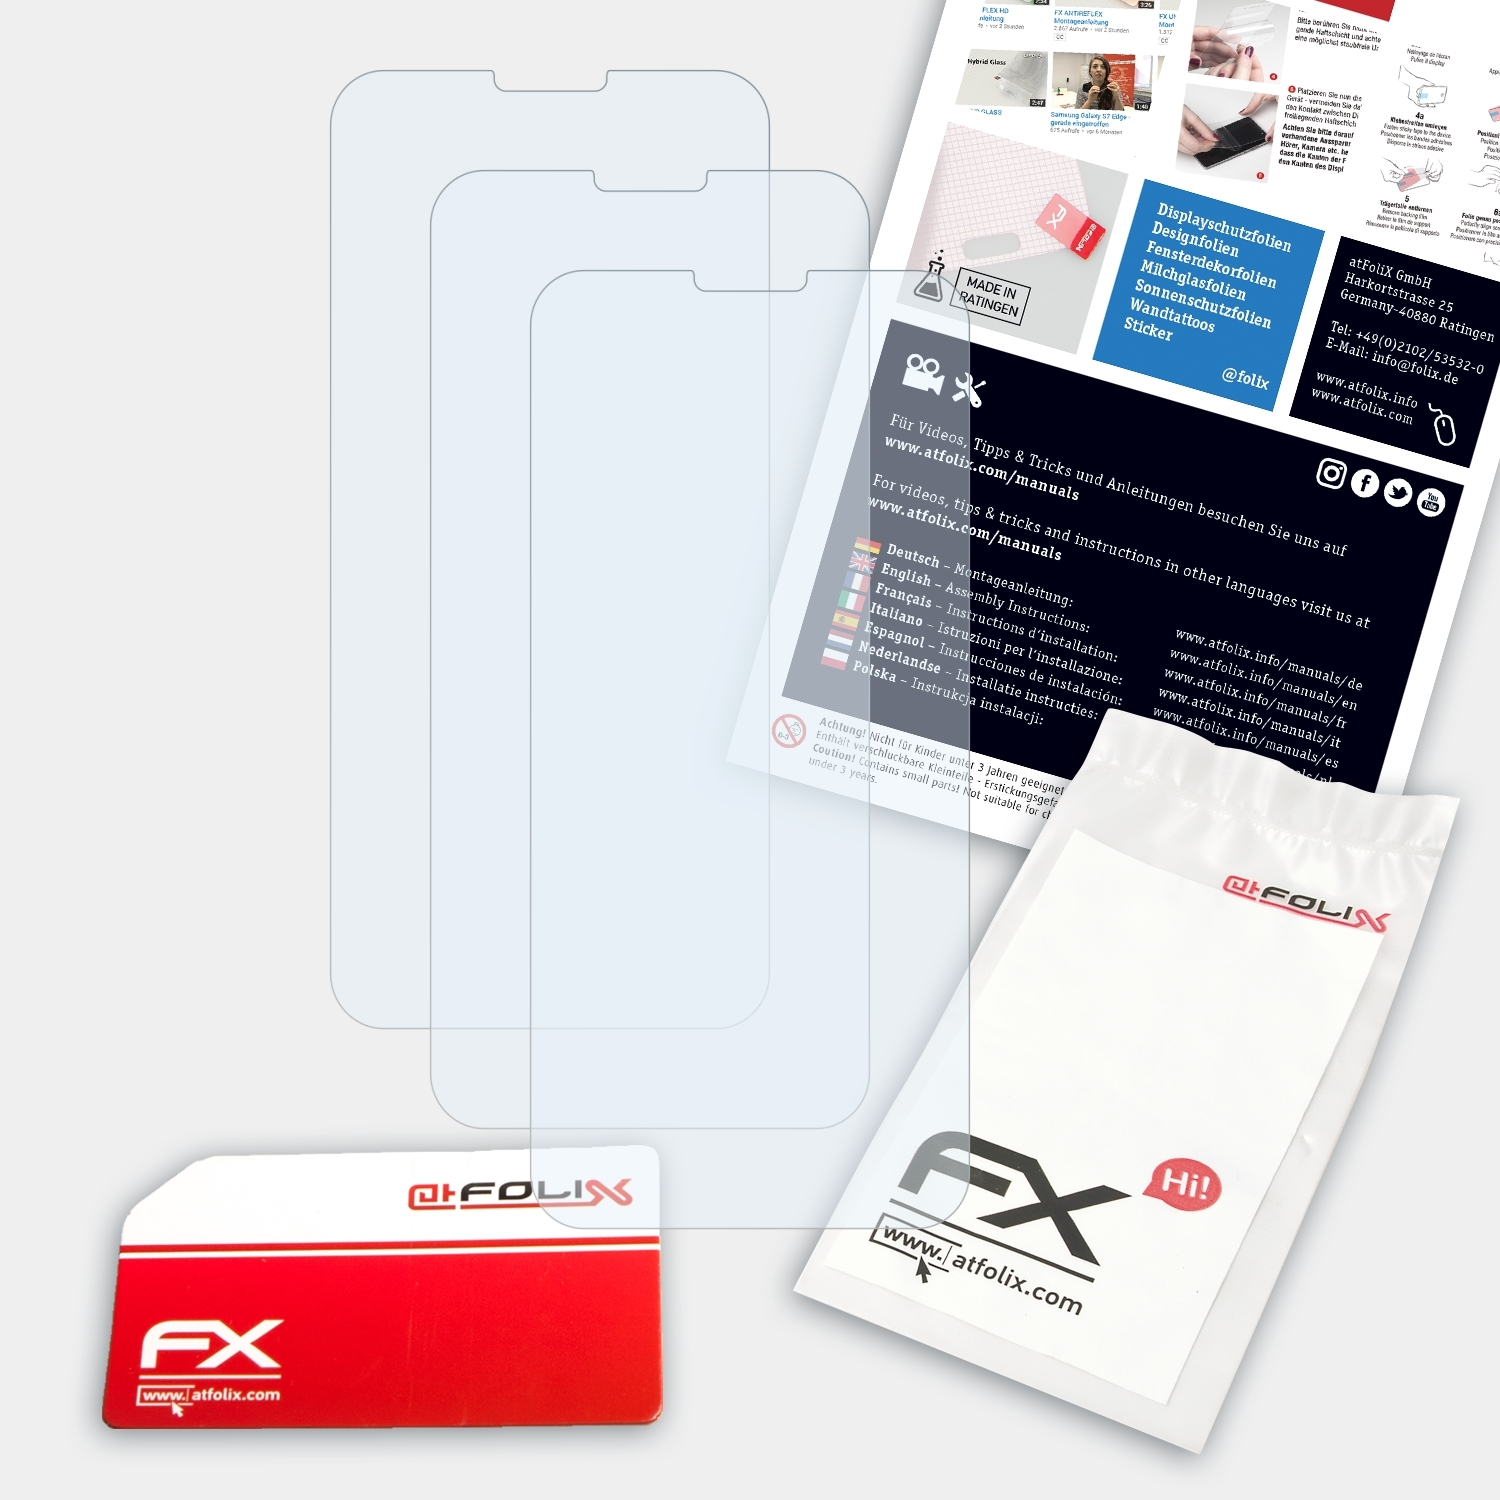 3x V50S ThinQ) FX-Clear ATFOLIX LG Displayschutz(für